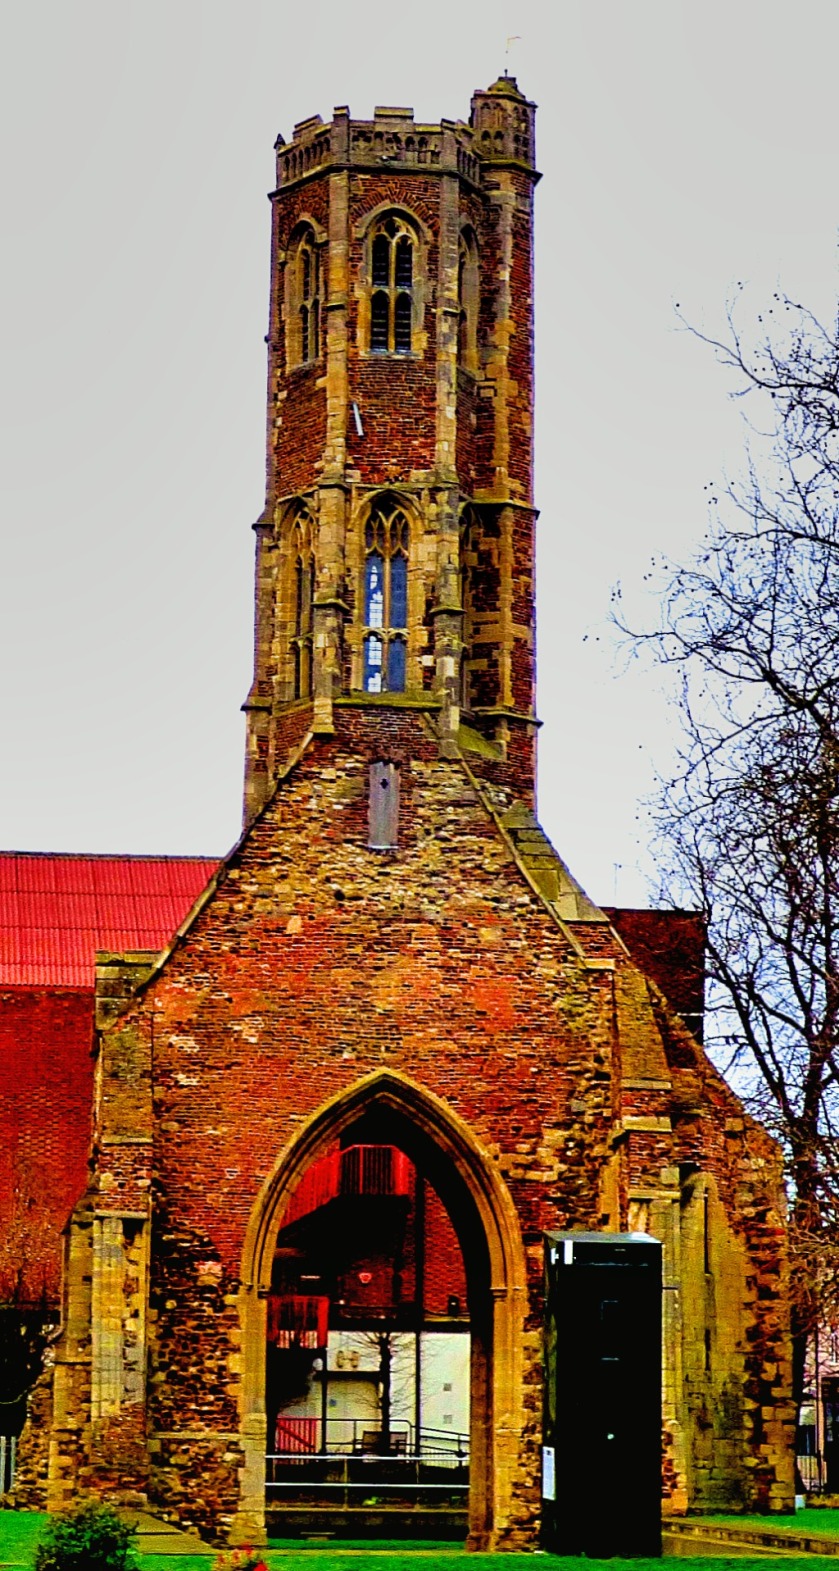 Greyfriars tower